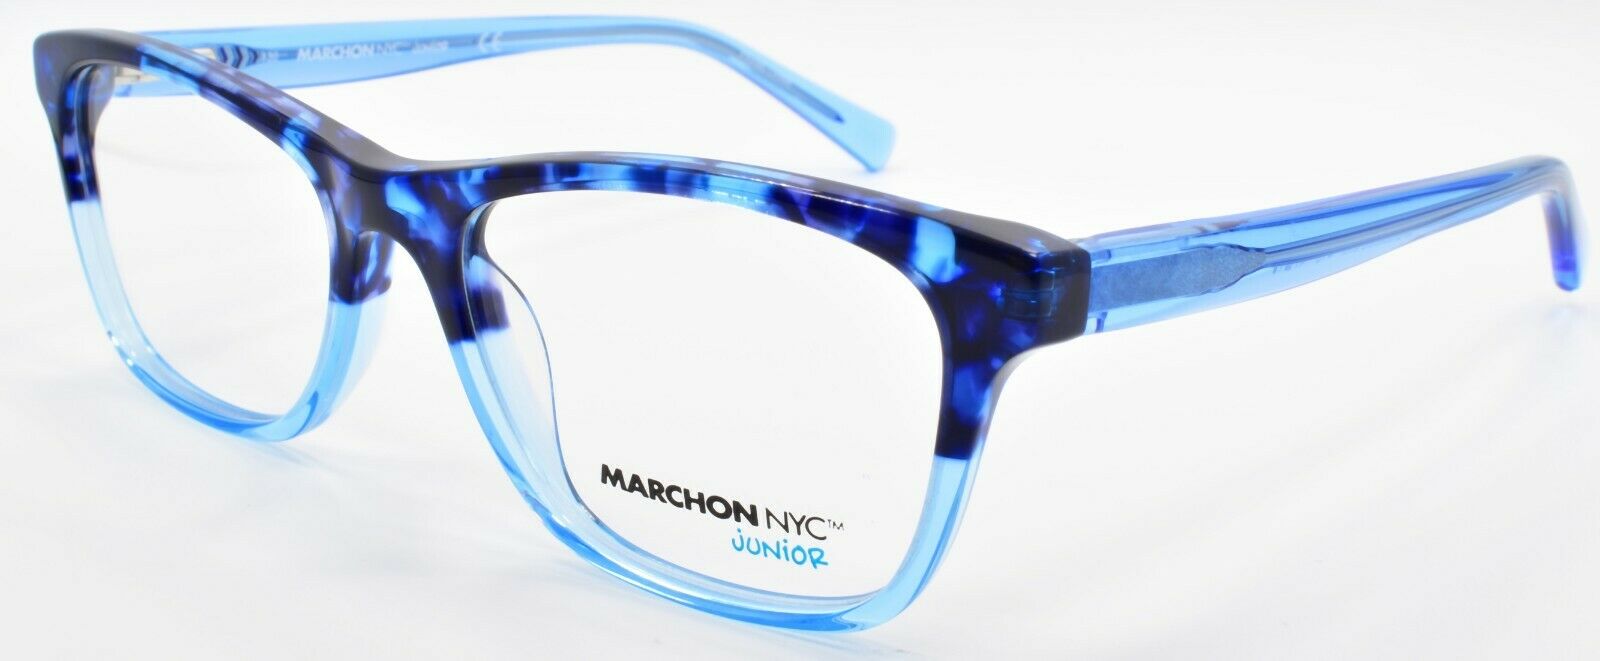 1-Marchon M-Brookfield Mini 415 Kids Girls Eyeglasses 47-15-130 Blue Tortoise-886895470605-IKSpecs